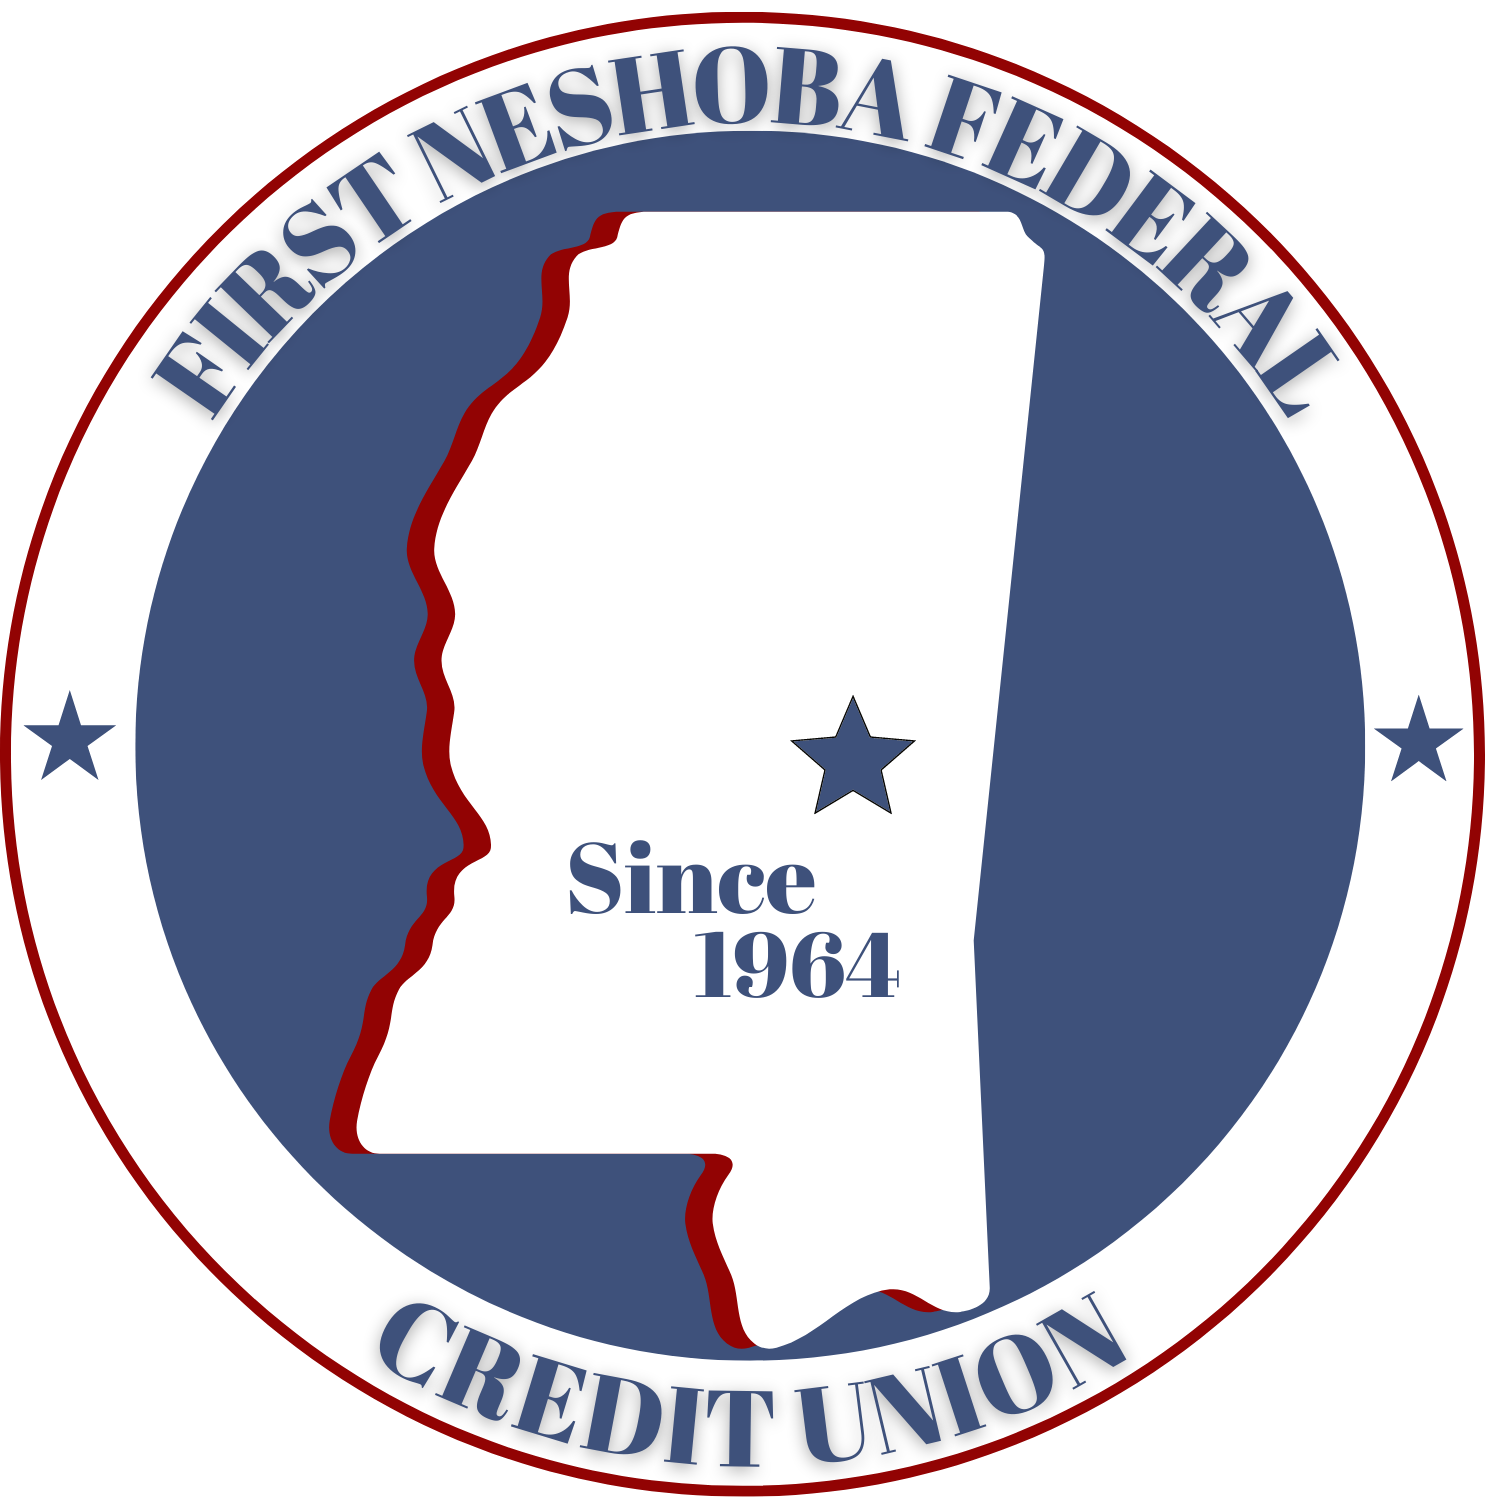 First Neshoba Federal Credit Union